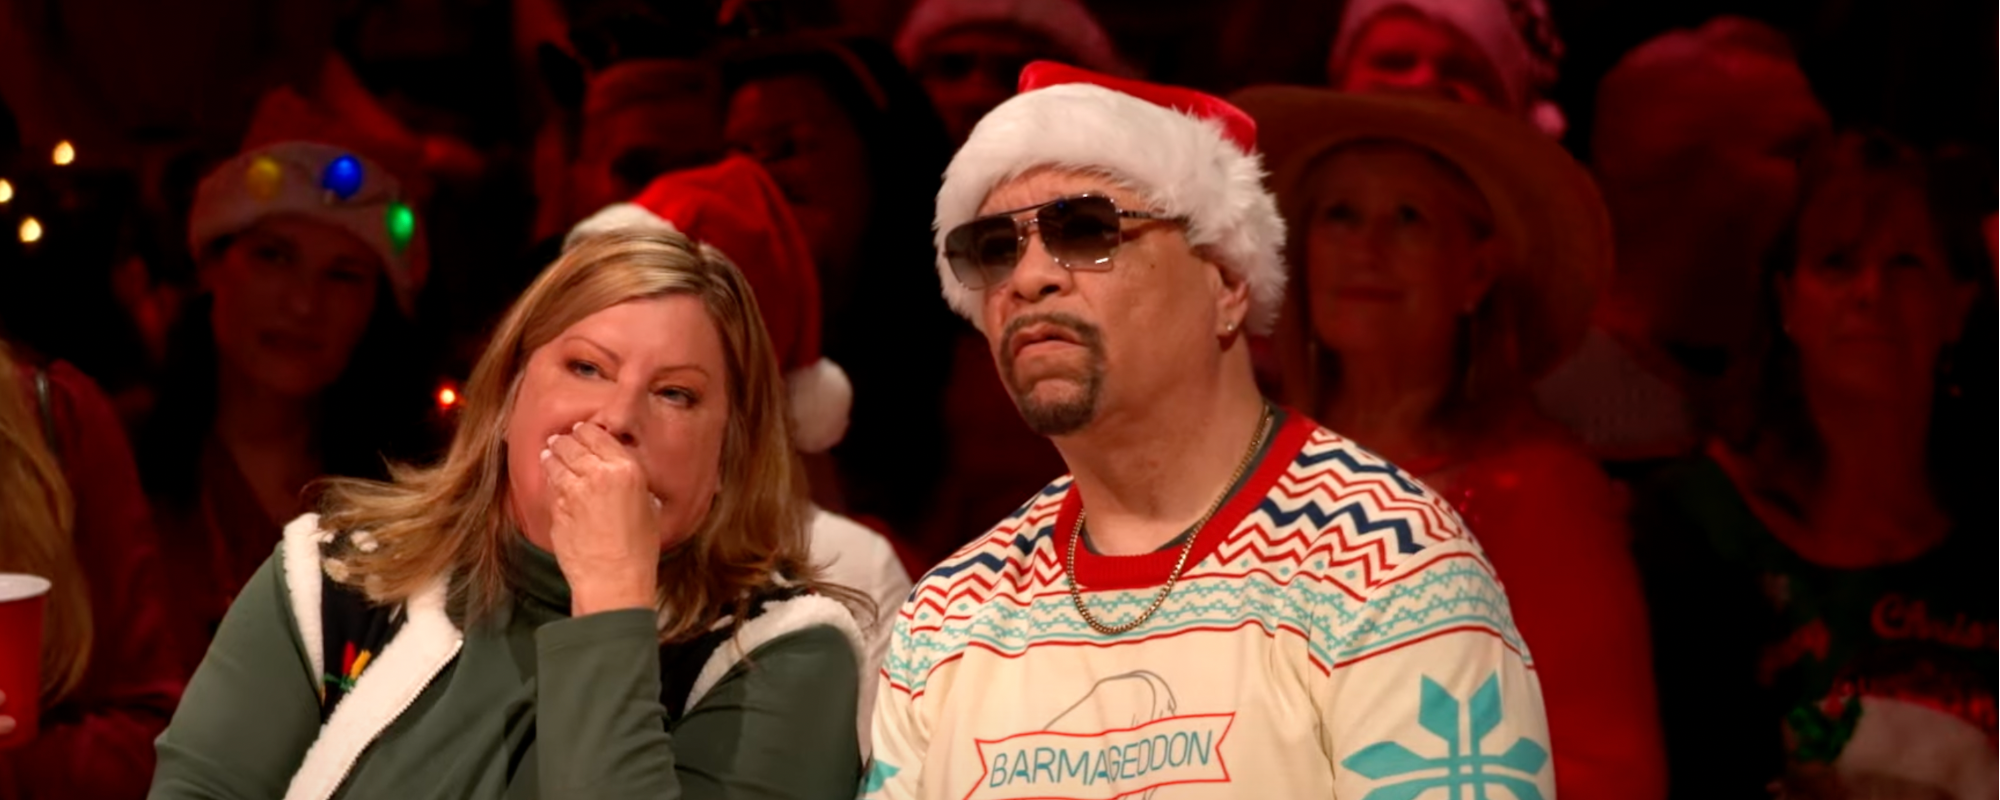 Ice-T Is Ice Cold to Blake Shelton’s Trash Talking on Holiday-Themed ‘Barmageddon’